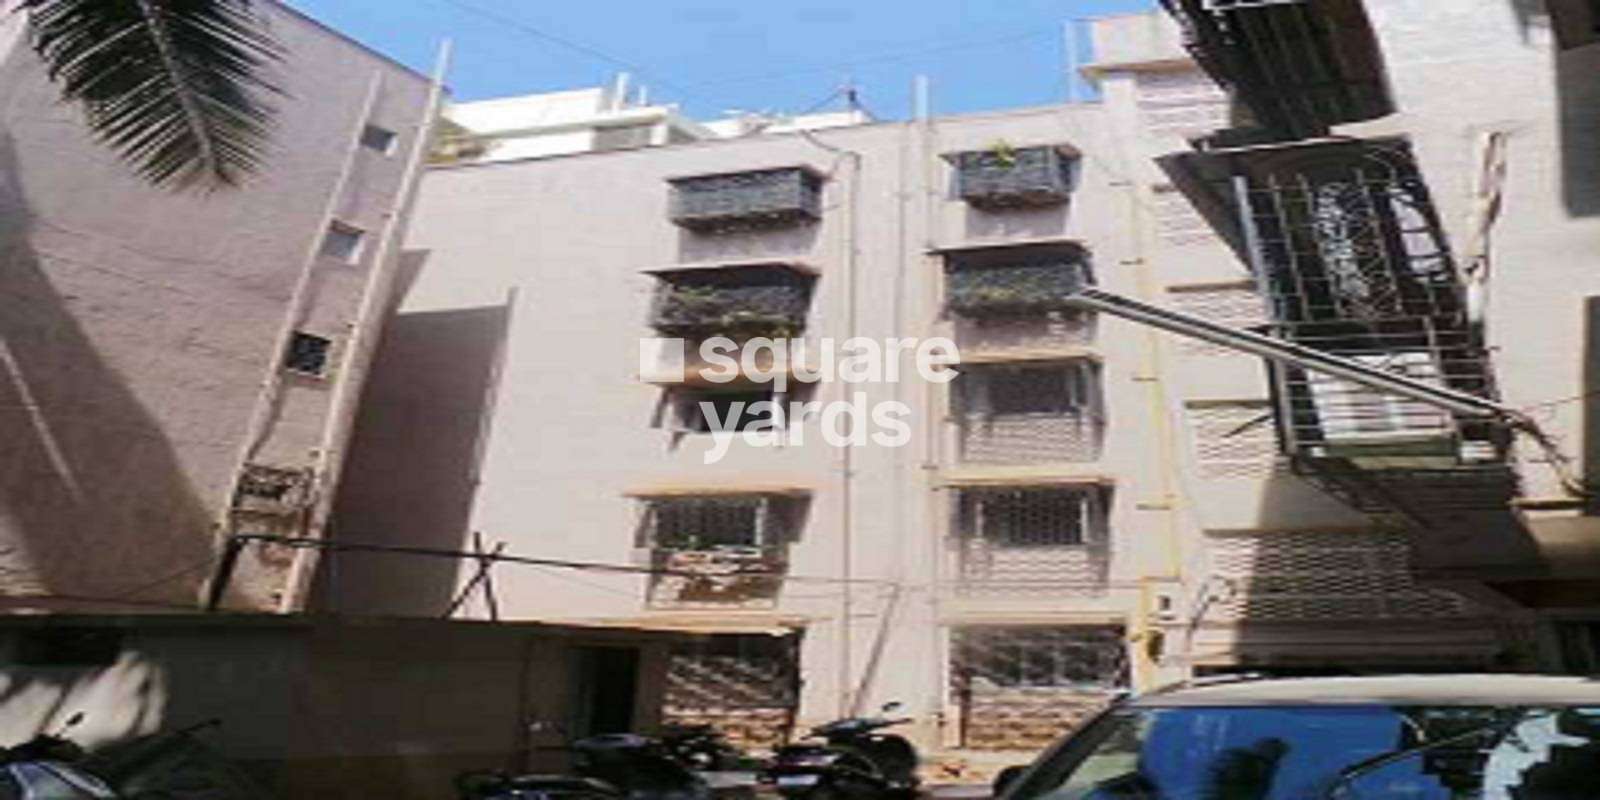 Ramachandra Apartment Cover Image